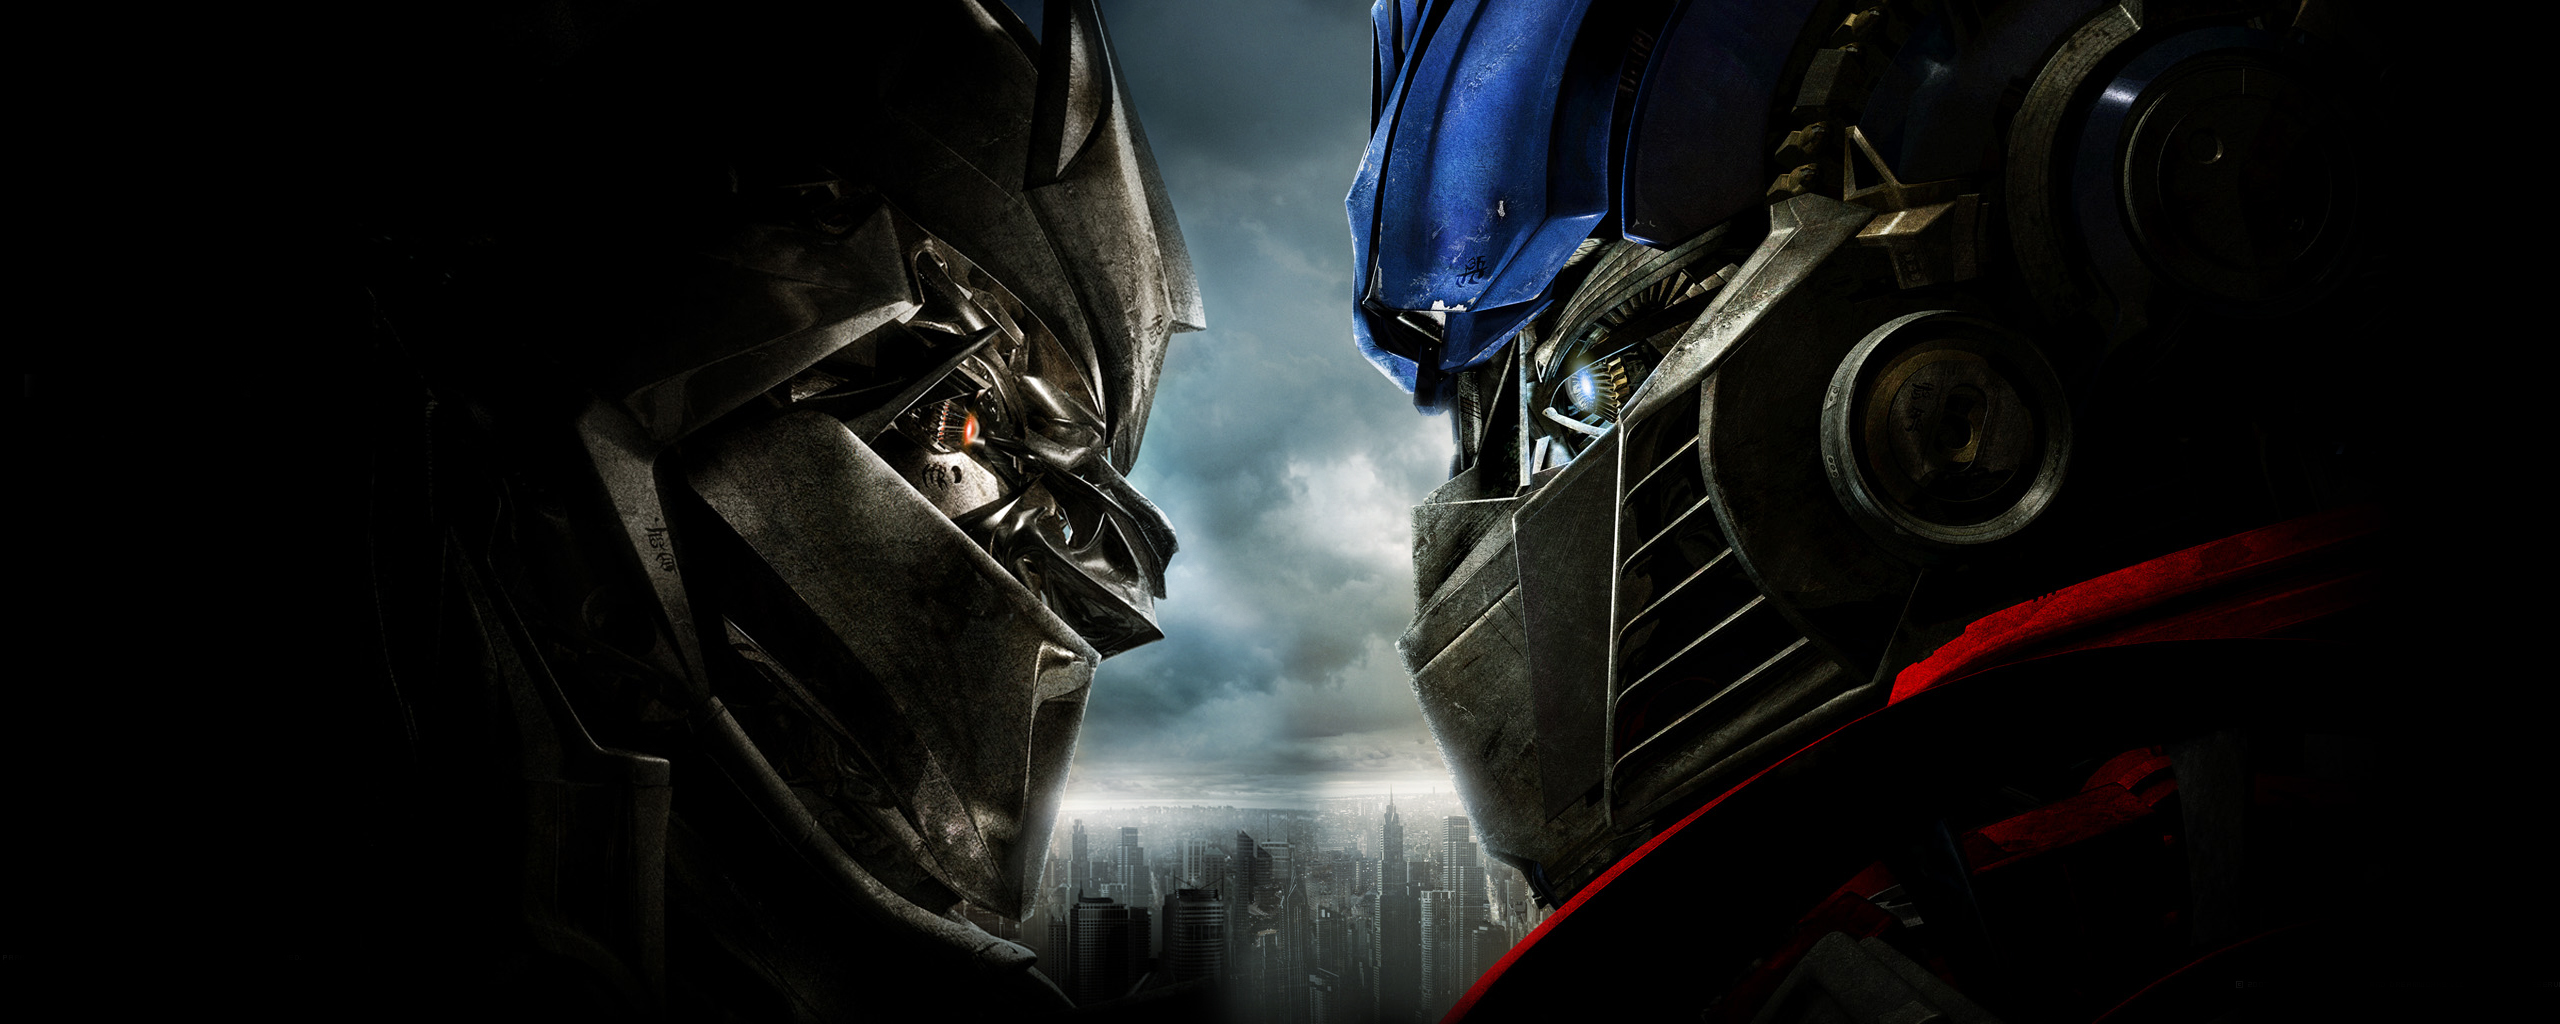 Optimus Prime Megatron Transformers - Transformers 2 Revenge Of The Fallen Wallpaper Optimus - HD Wallpaper 